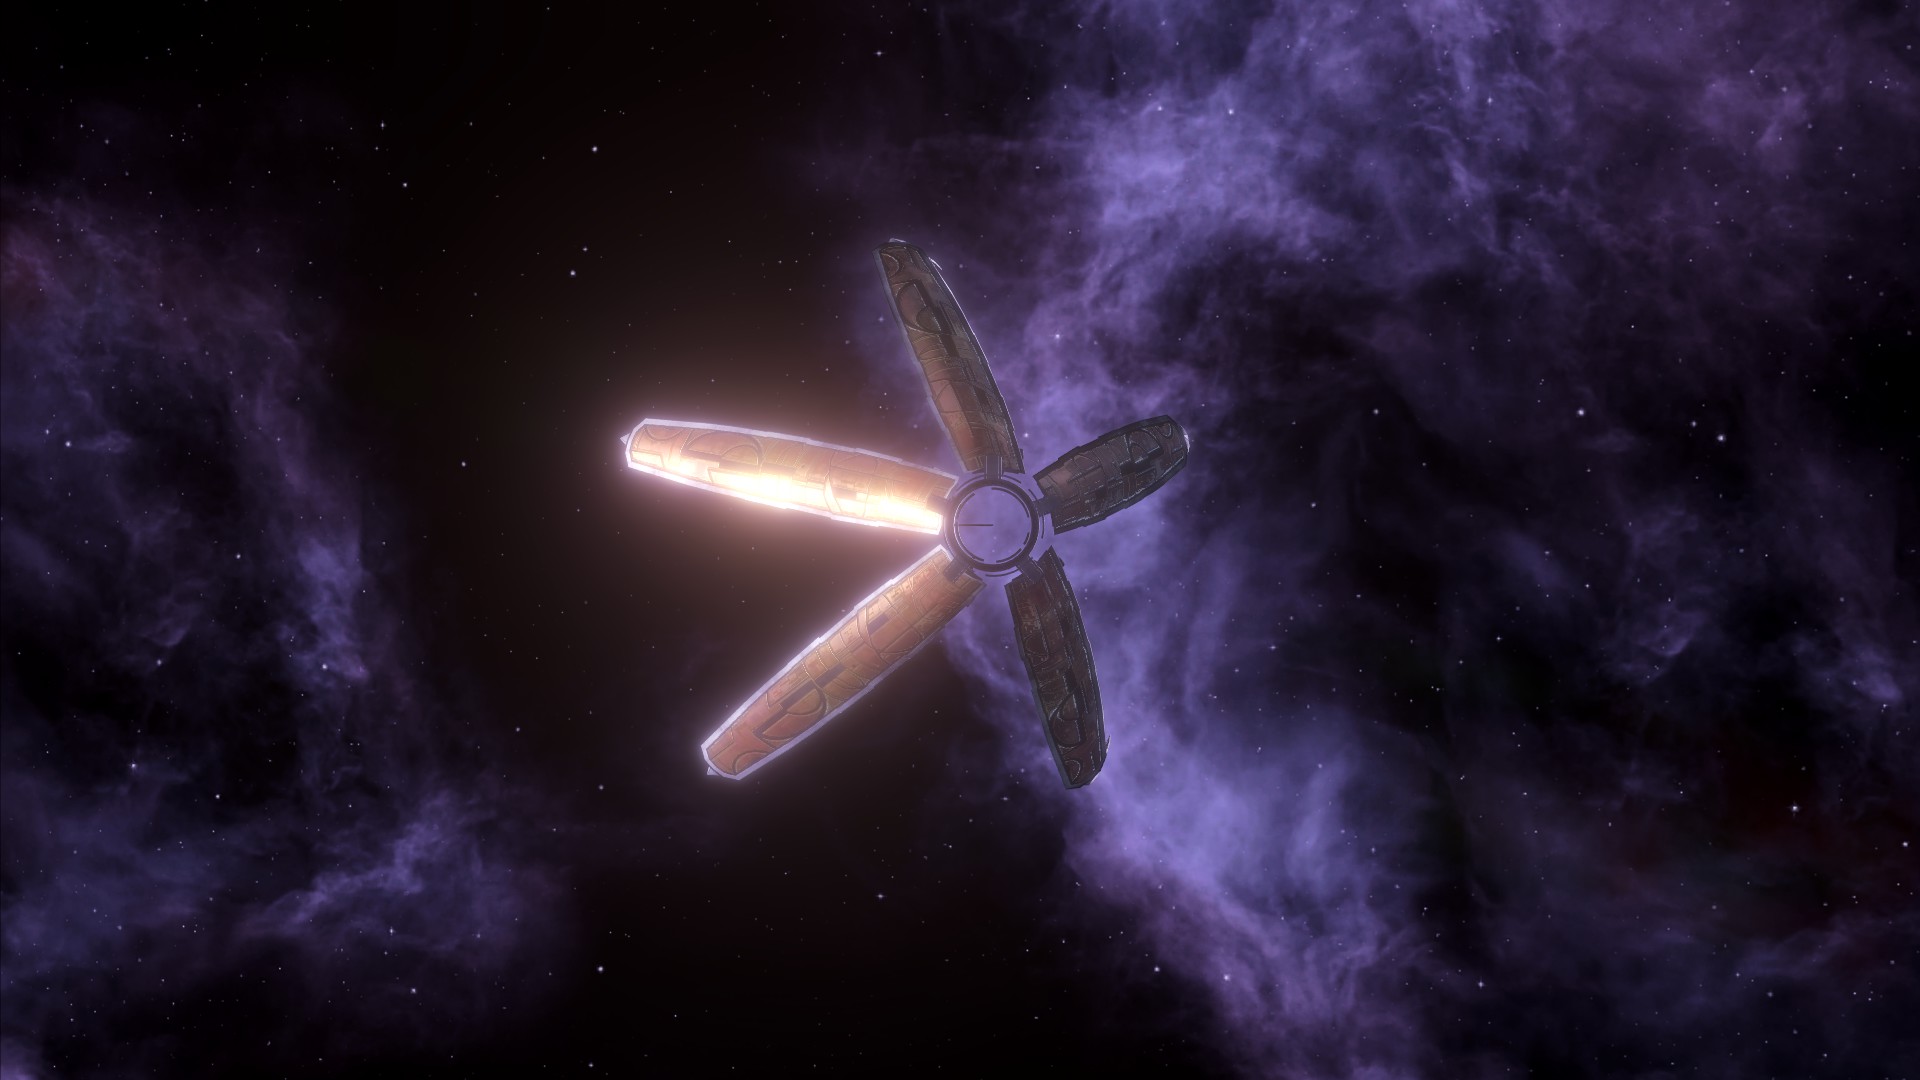 citadel station rendered in Stellaris